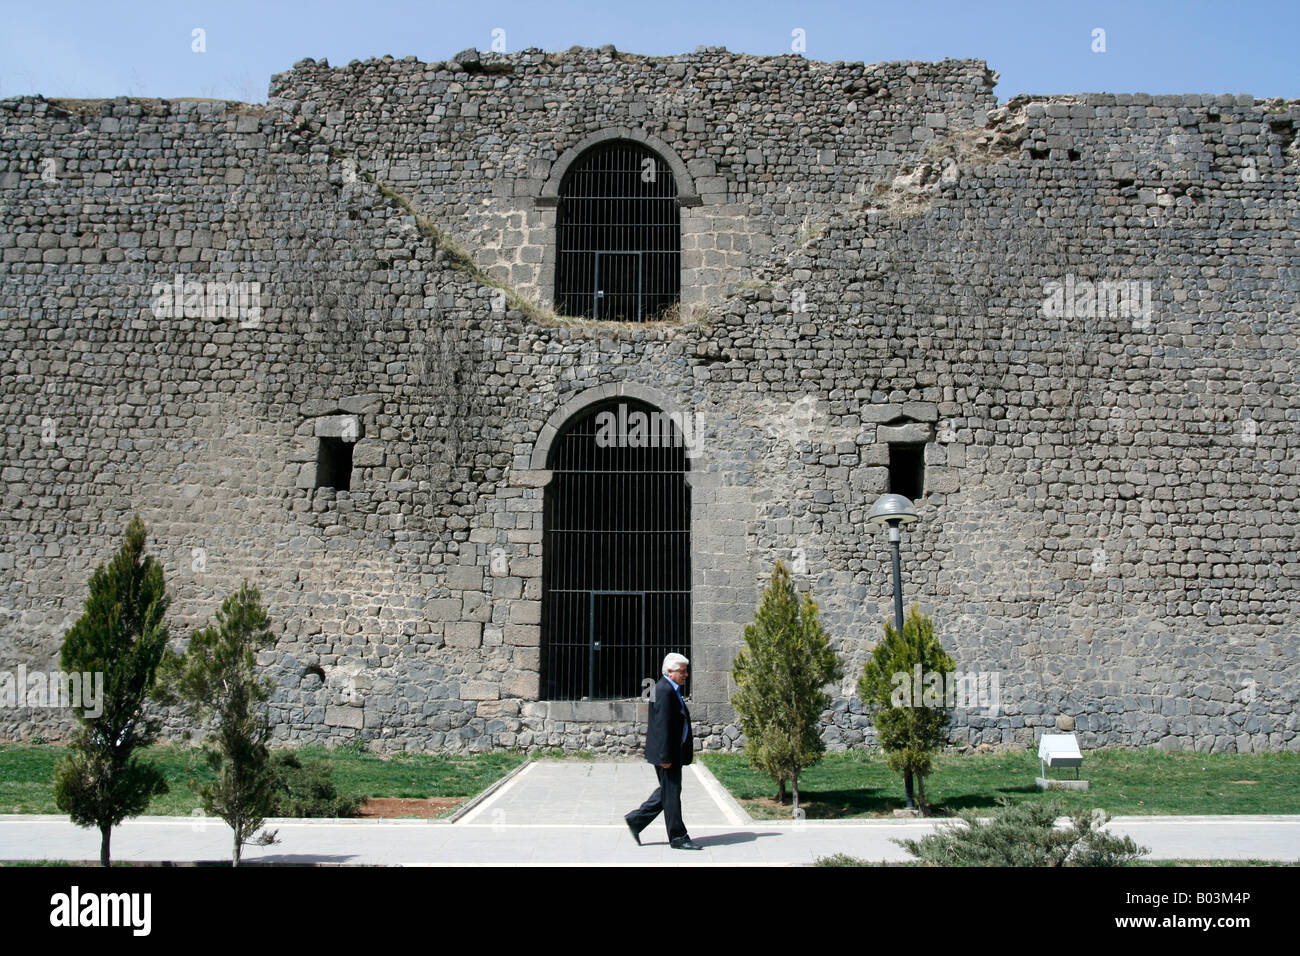 A pedestrian walks past a section of the black basalt city walls in Diyarbakir Turkey Stock Photo